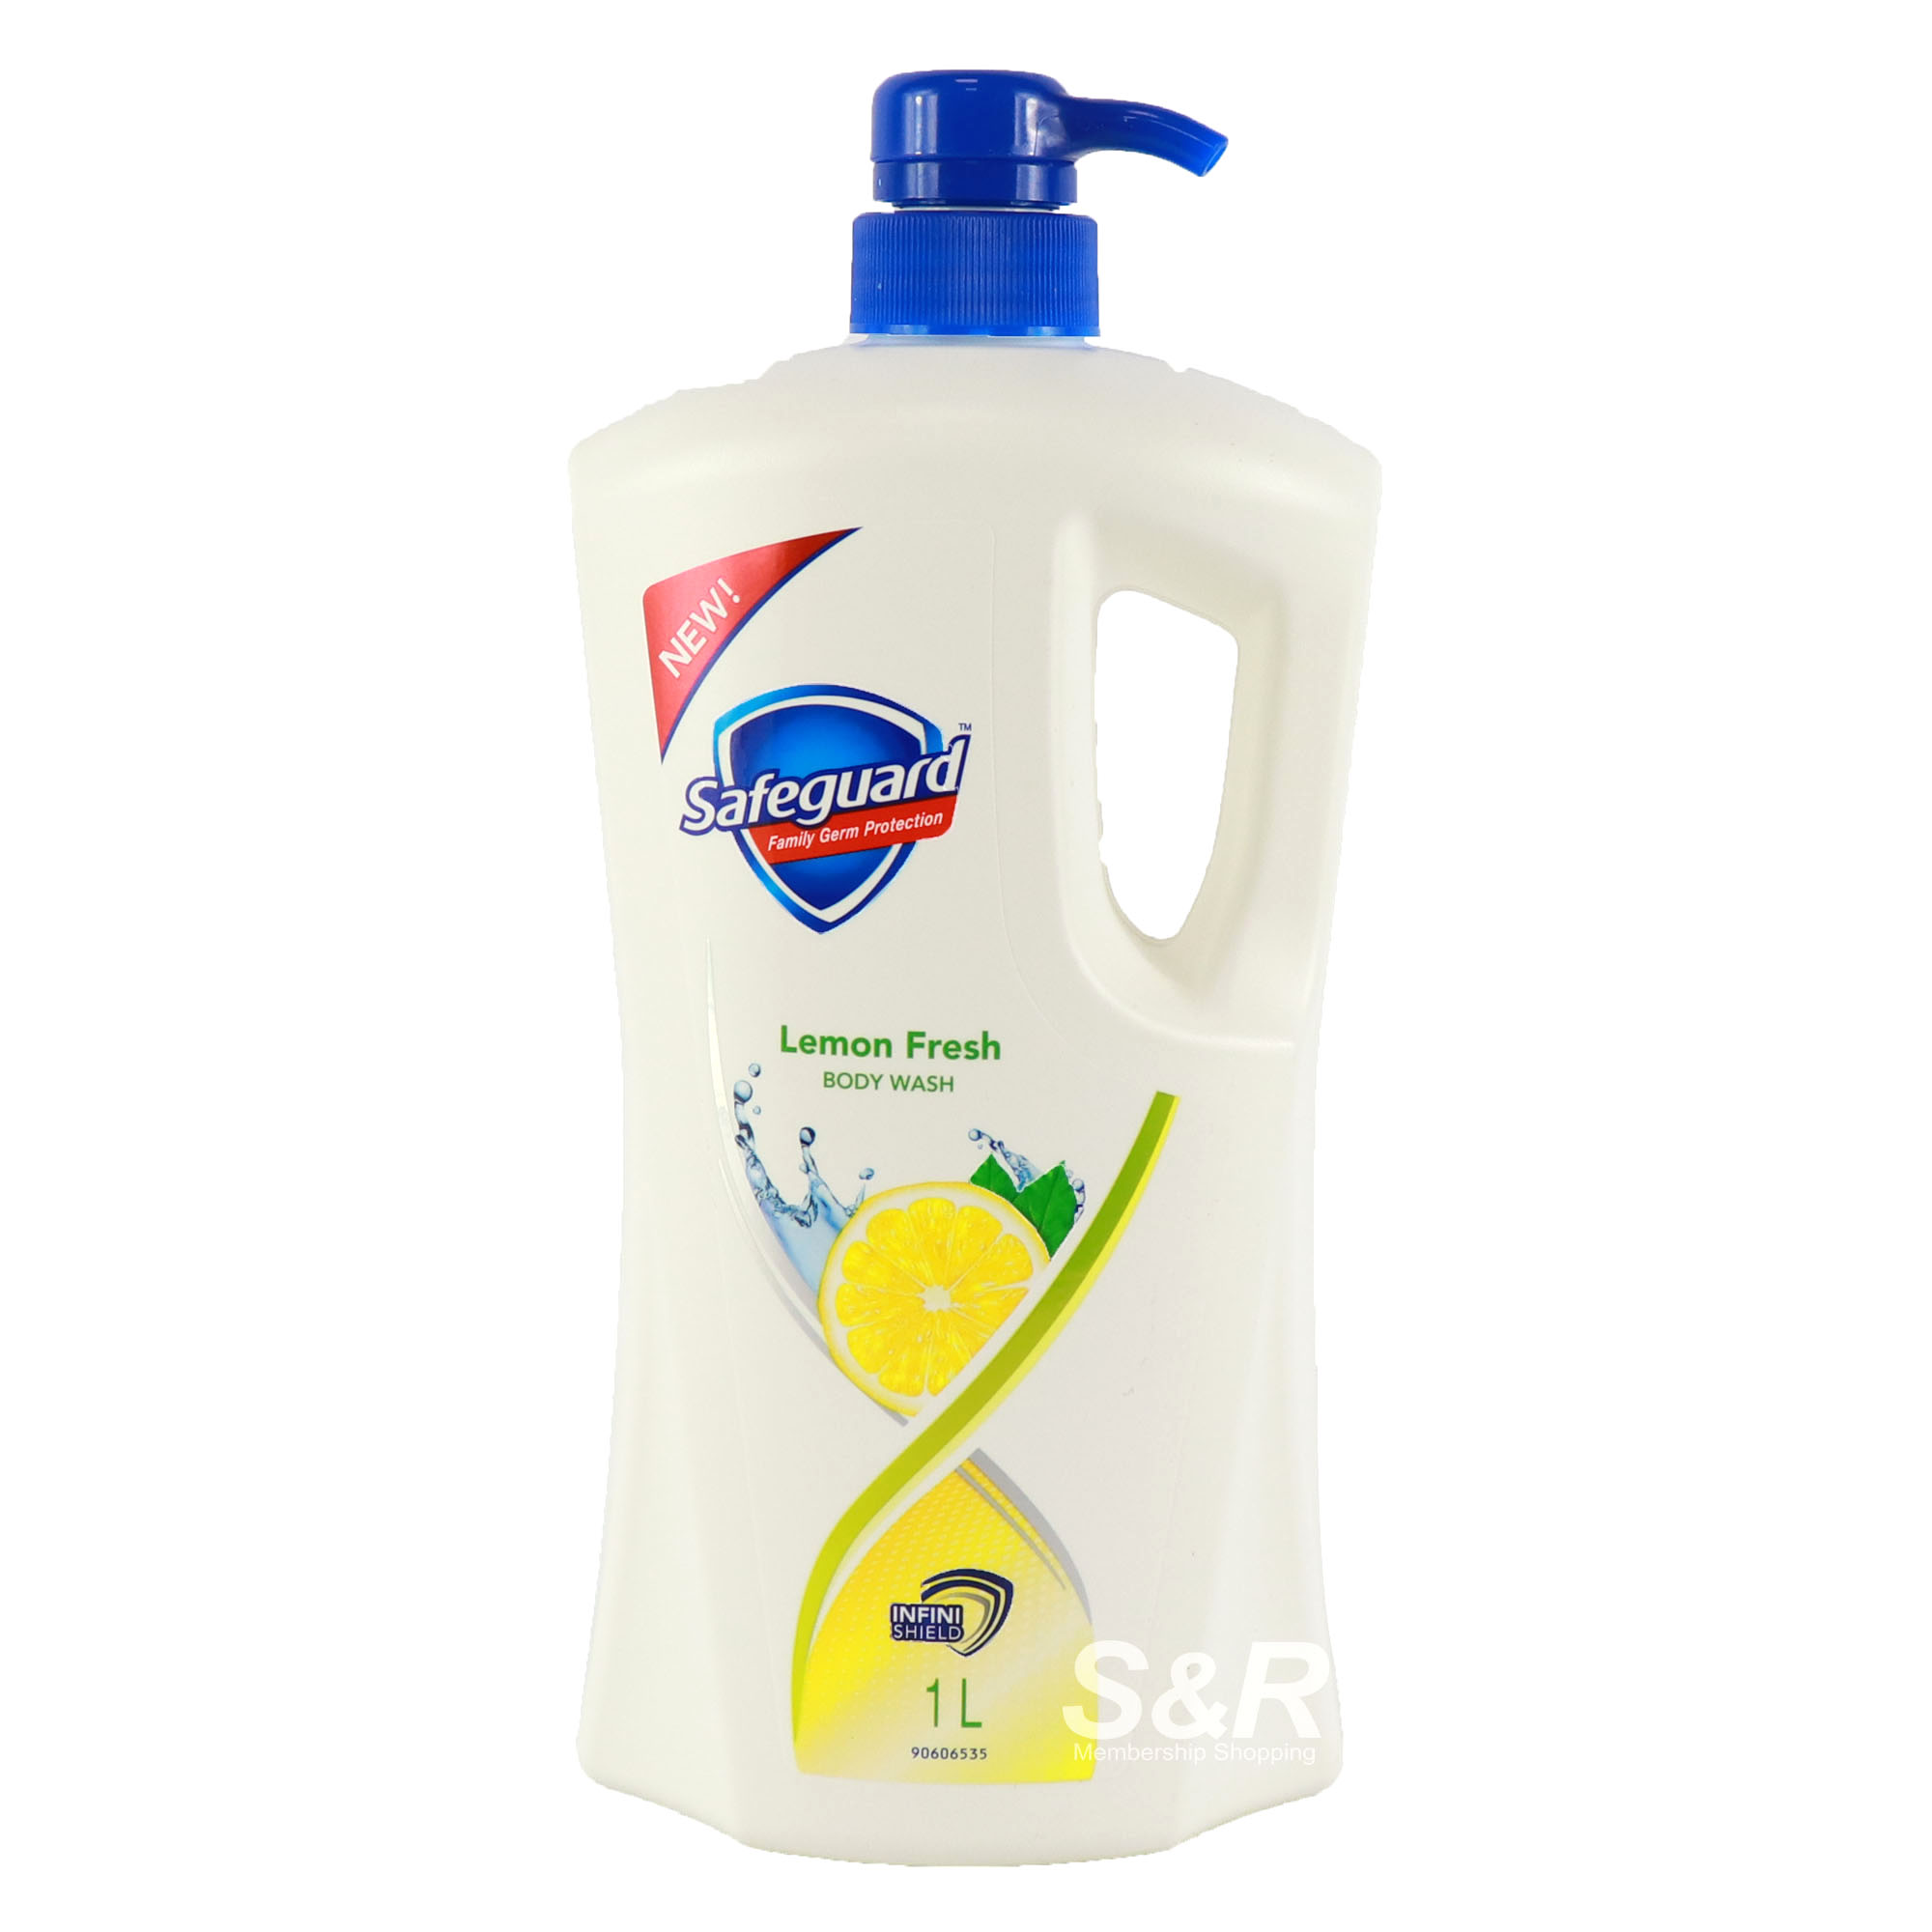 Safeguard Body Wash Lemon Fresh 1L